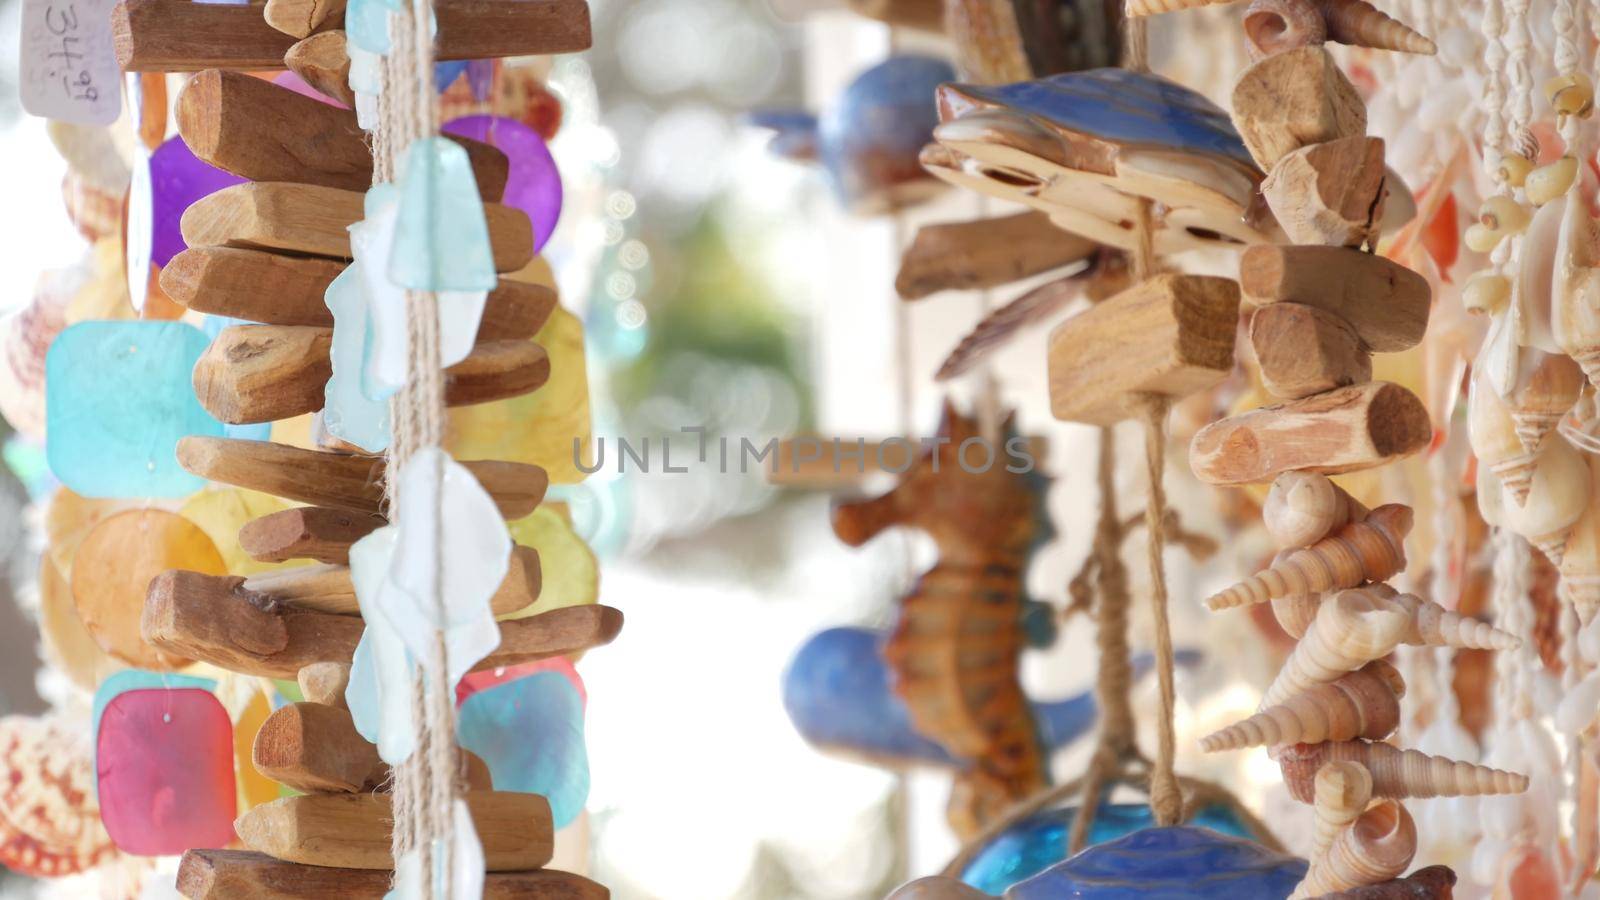 Nautical style hanging seashells decoration, beachfront blue wooden holiday home, pacific coast, California USA. Marine pastel interior decor of beach house in breeze. Summertime sea wind aesthetic by DogoraSun